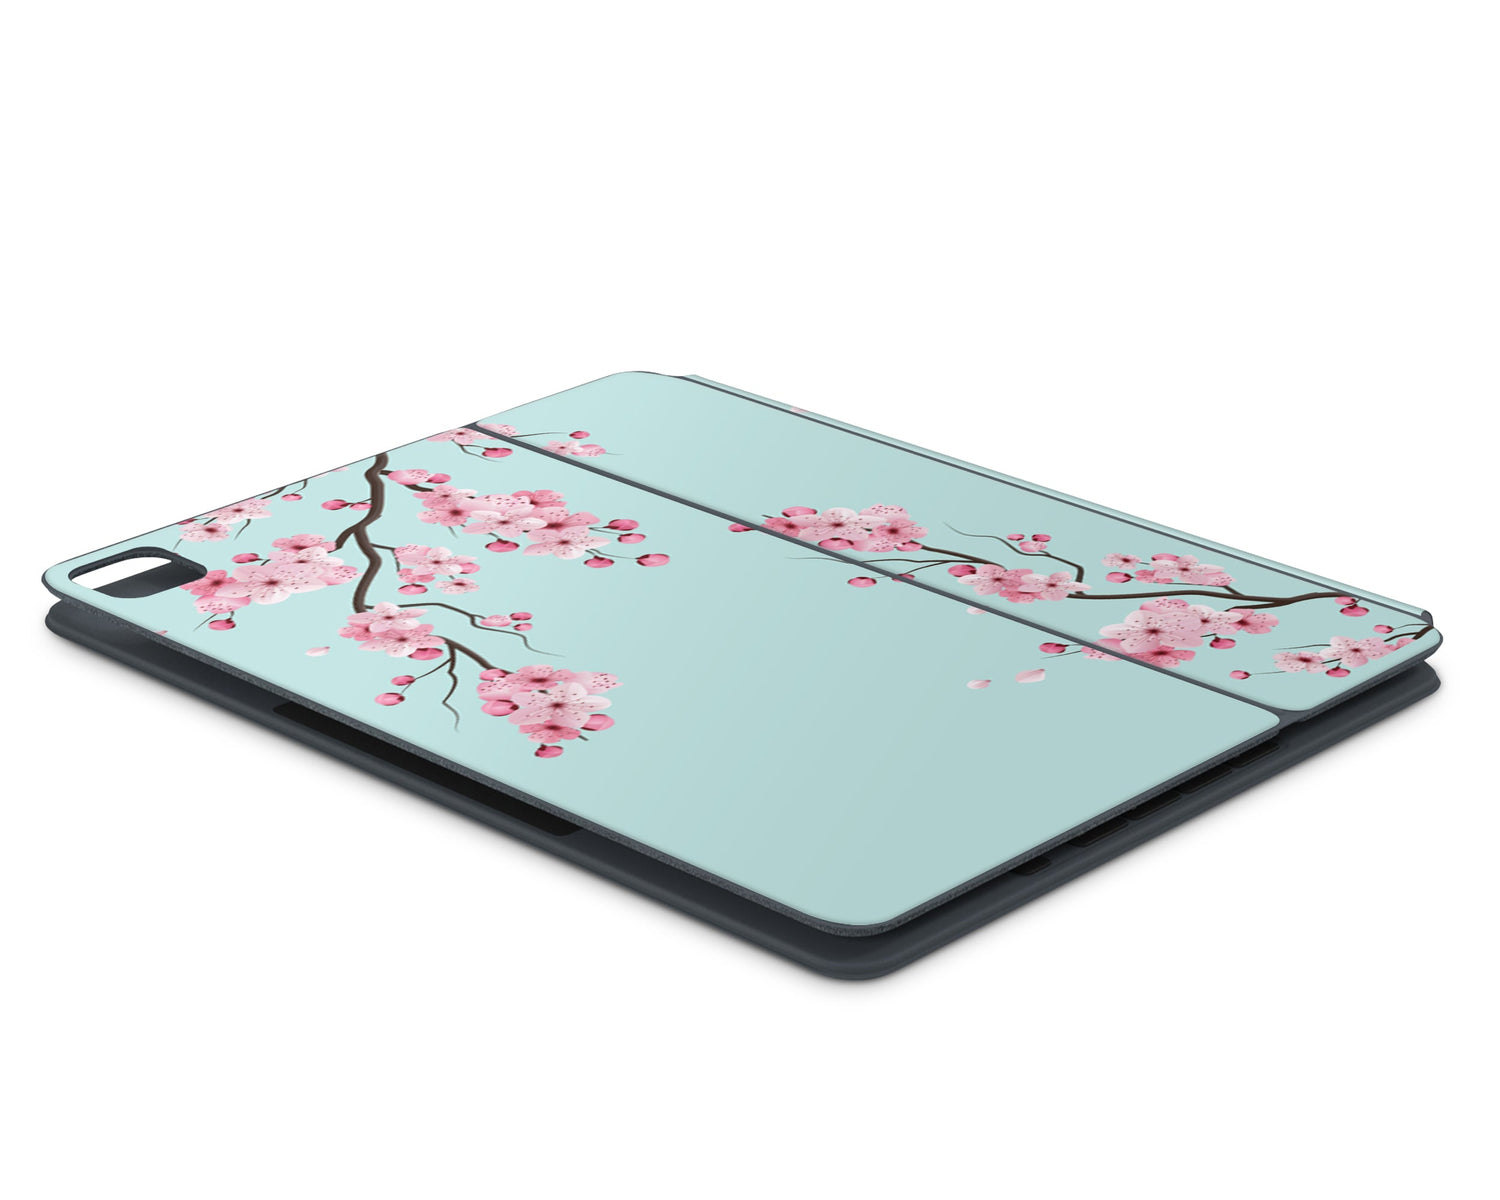 Lux Skins Magic Keyboard Cherry Blossom Teal Mint iPad Pro 11" Skins - Art Floral Skin